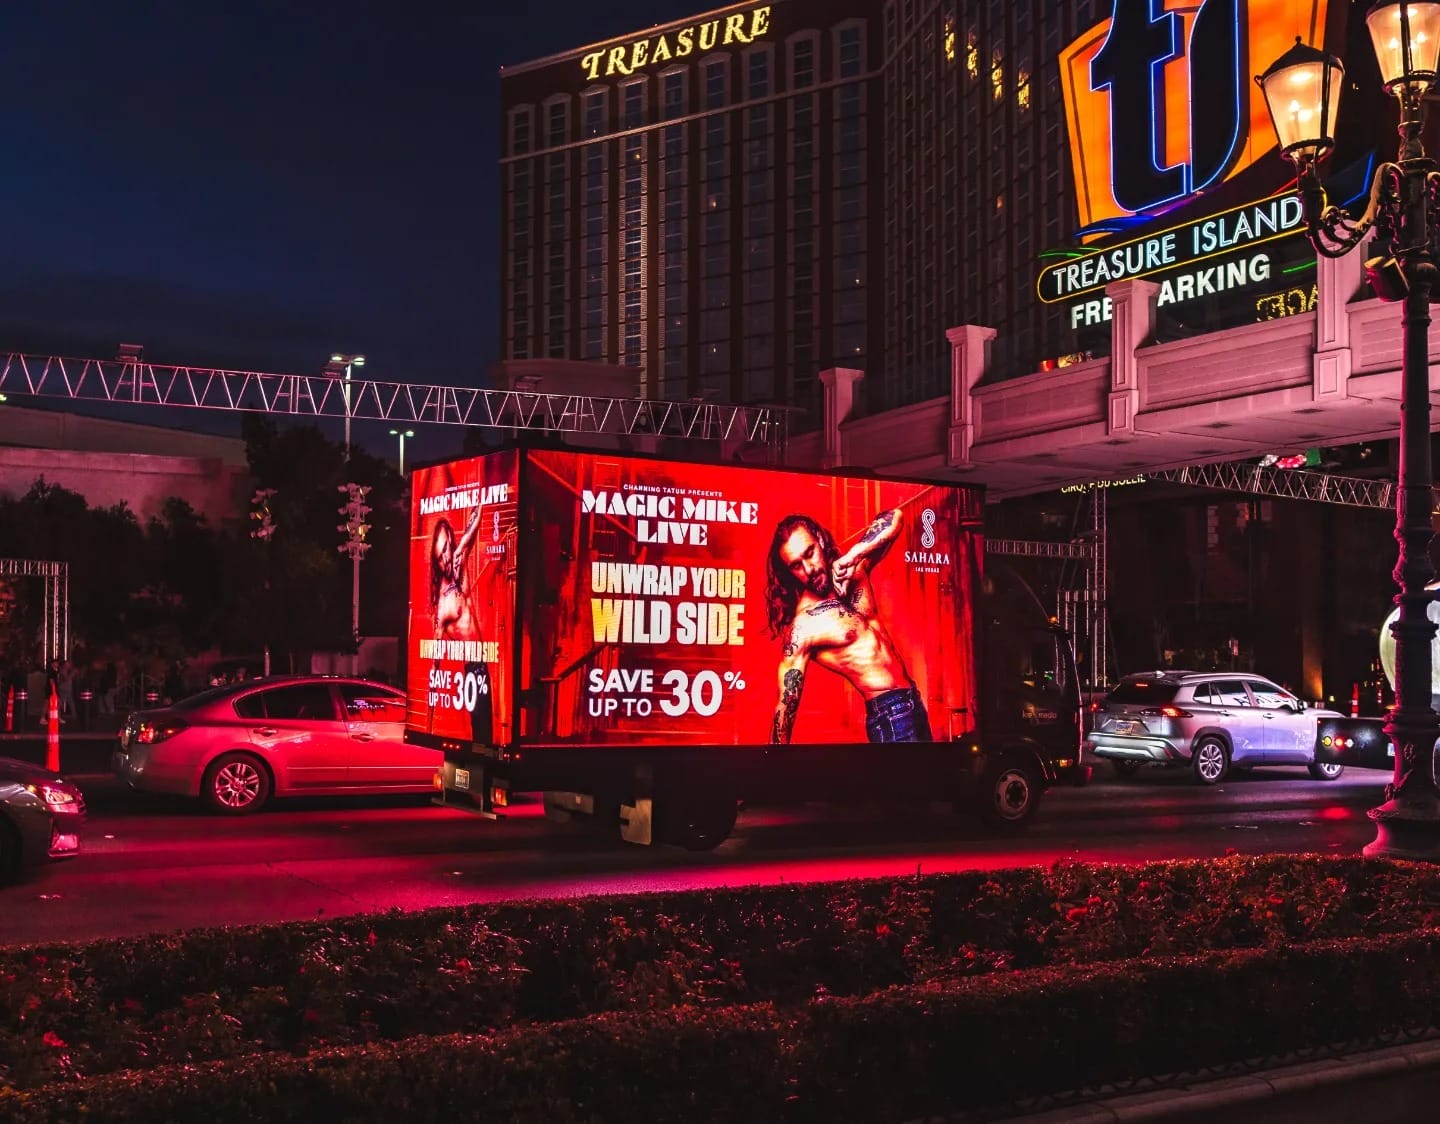 Illuminated Magic Mike billboard truck at night by casino.